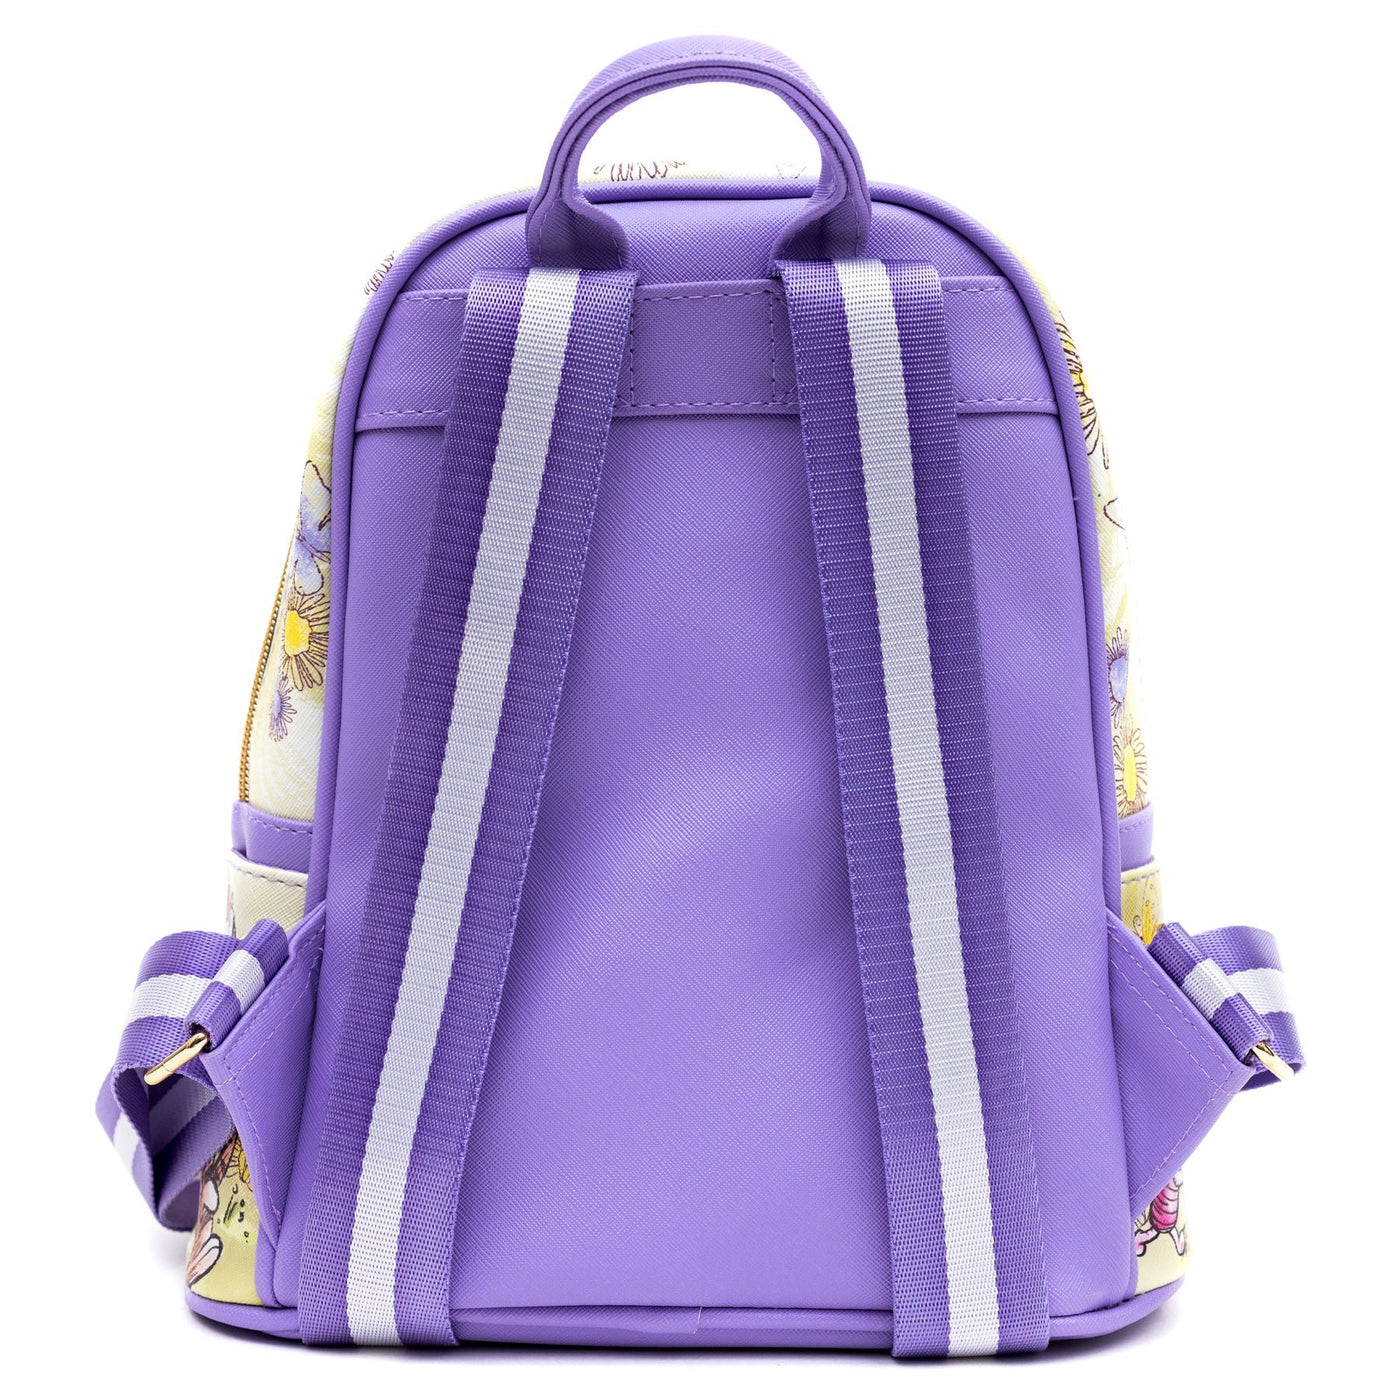 WondaPop Disney Winnie the Pooh Pastel Eeyore Mini Backpack